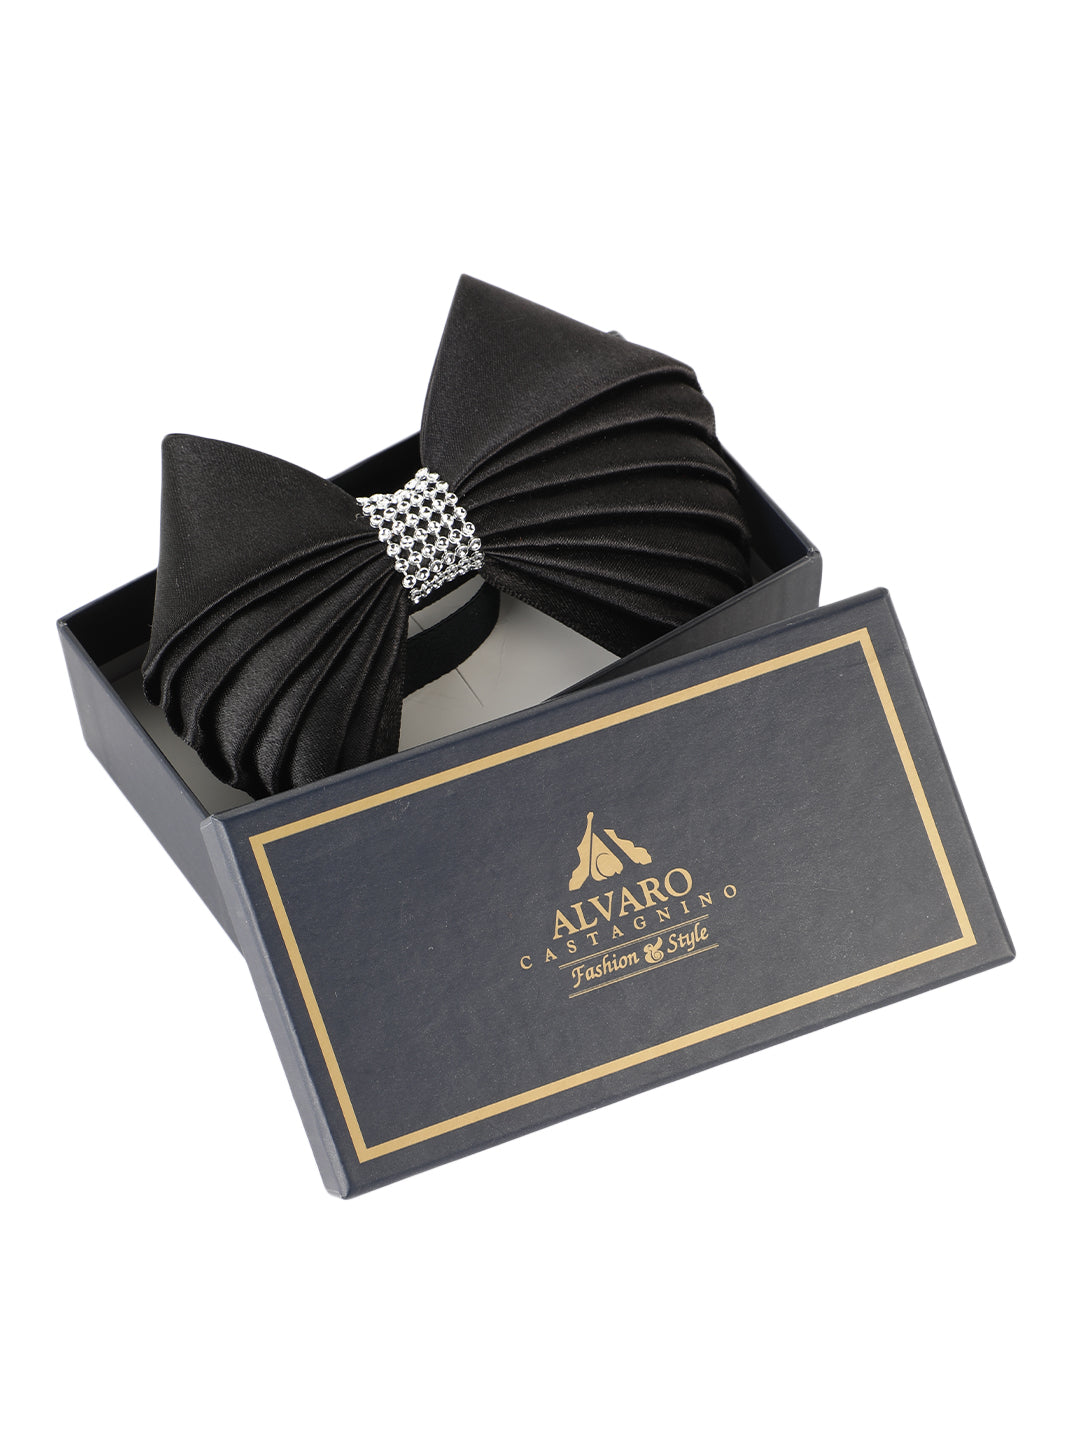 Alvaro Castagnino Men's Black Colored Microfiber Bow Tie